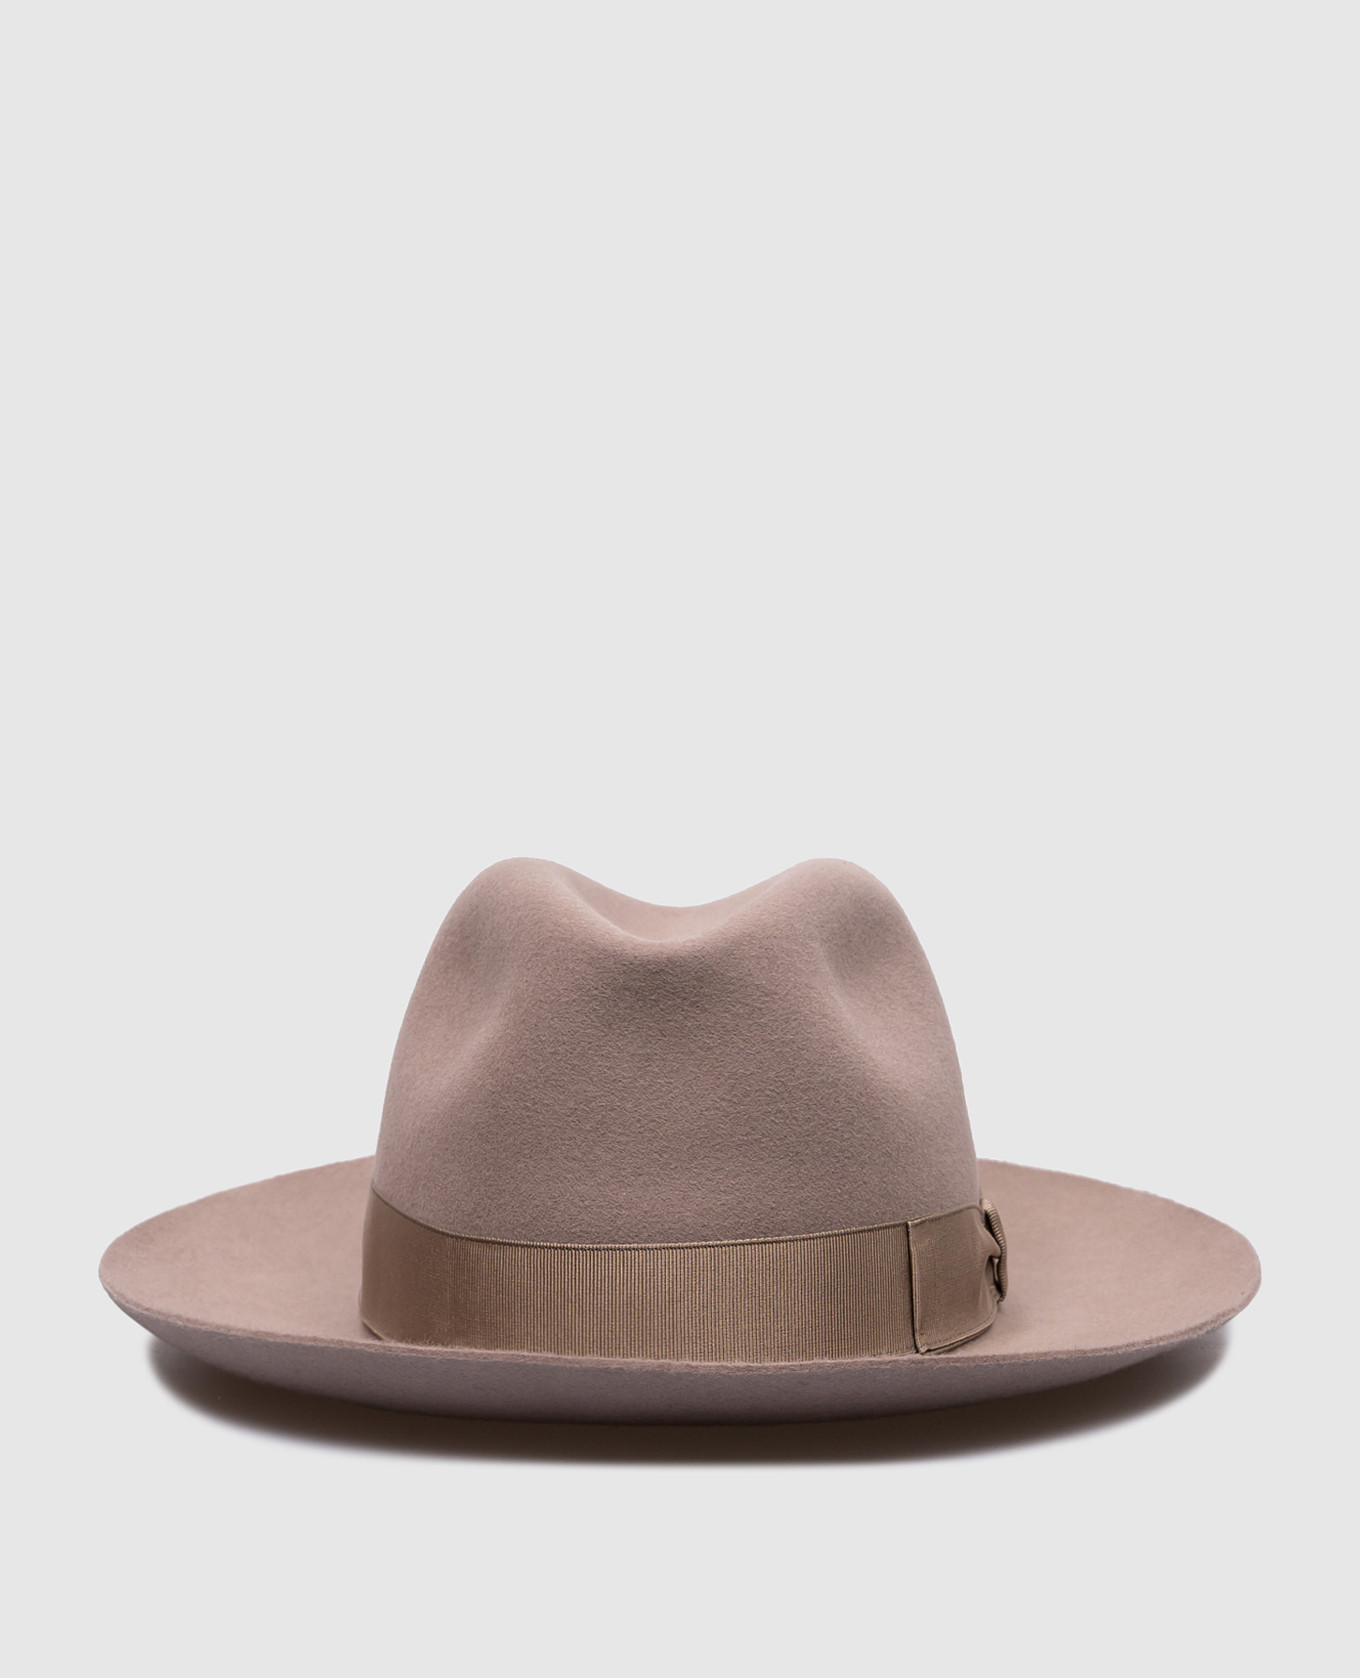 Amedeo brown hat